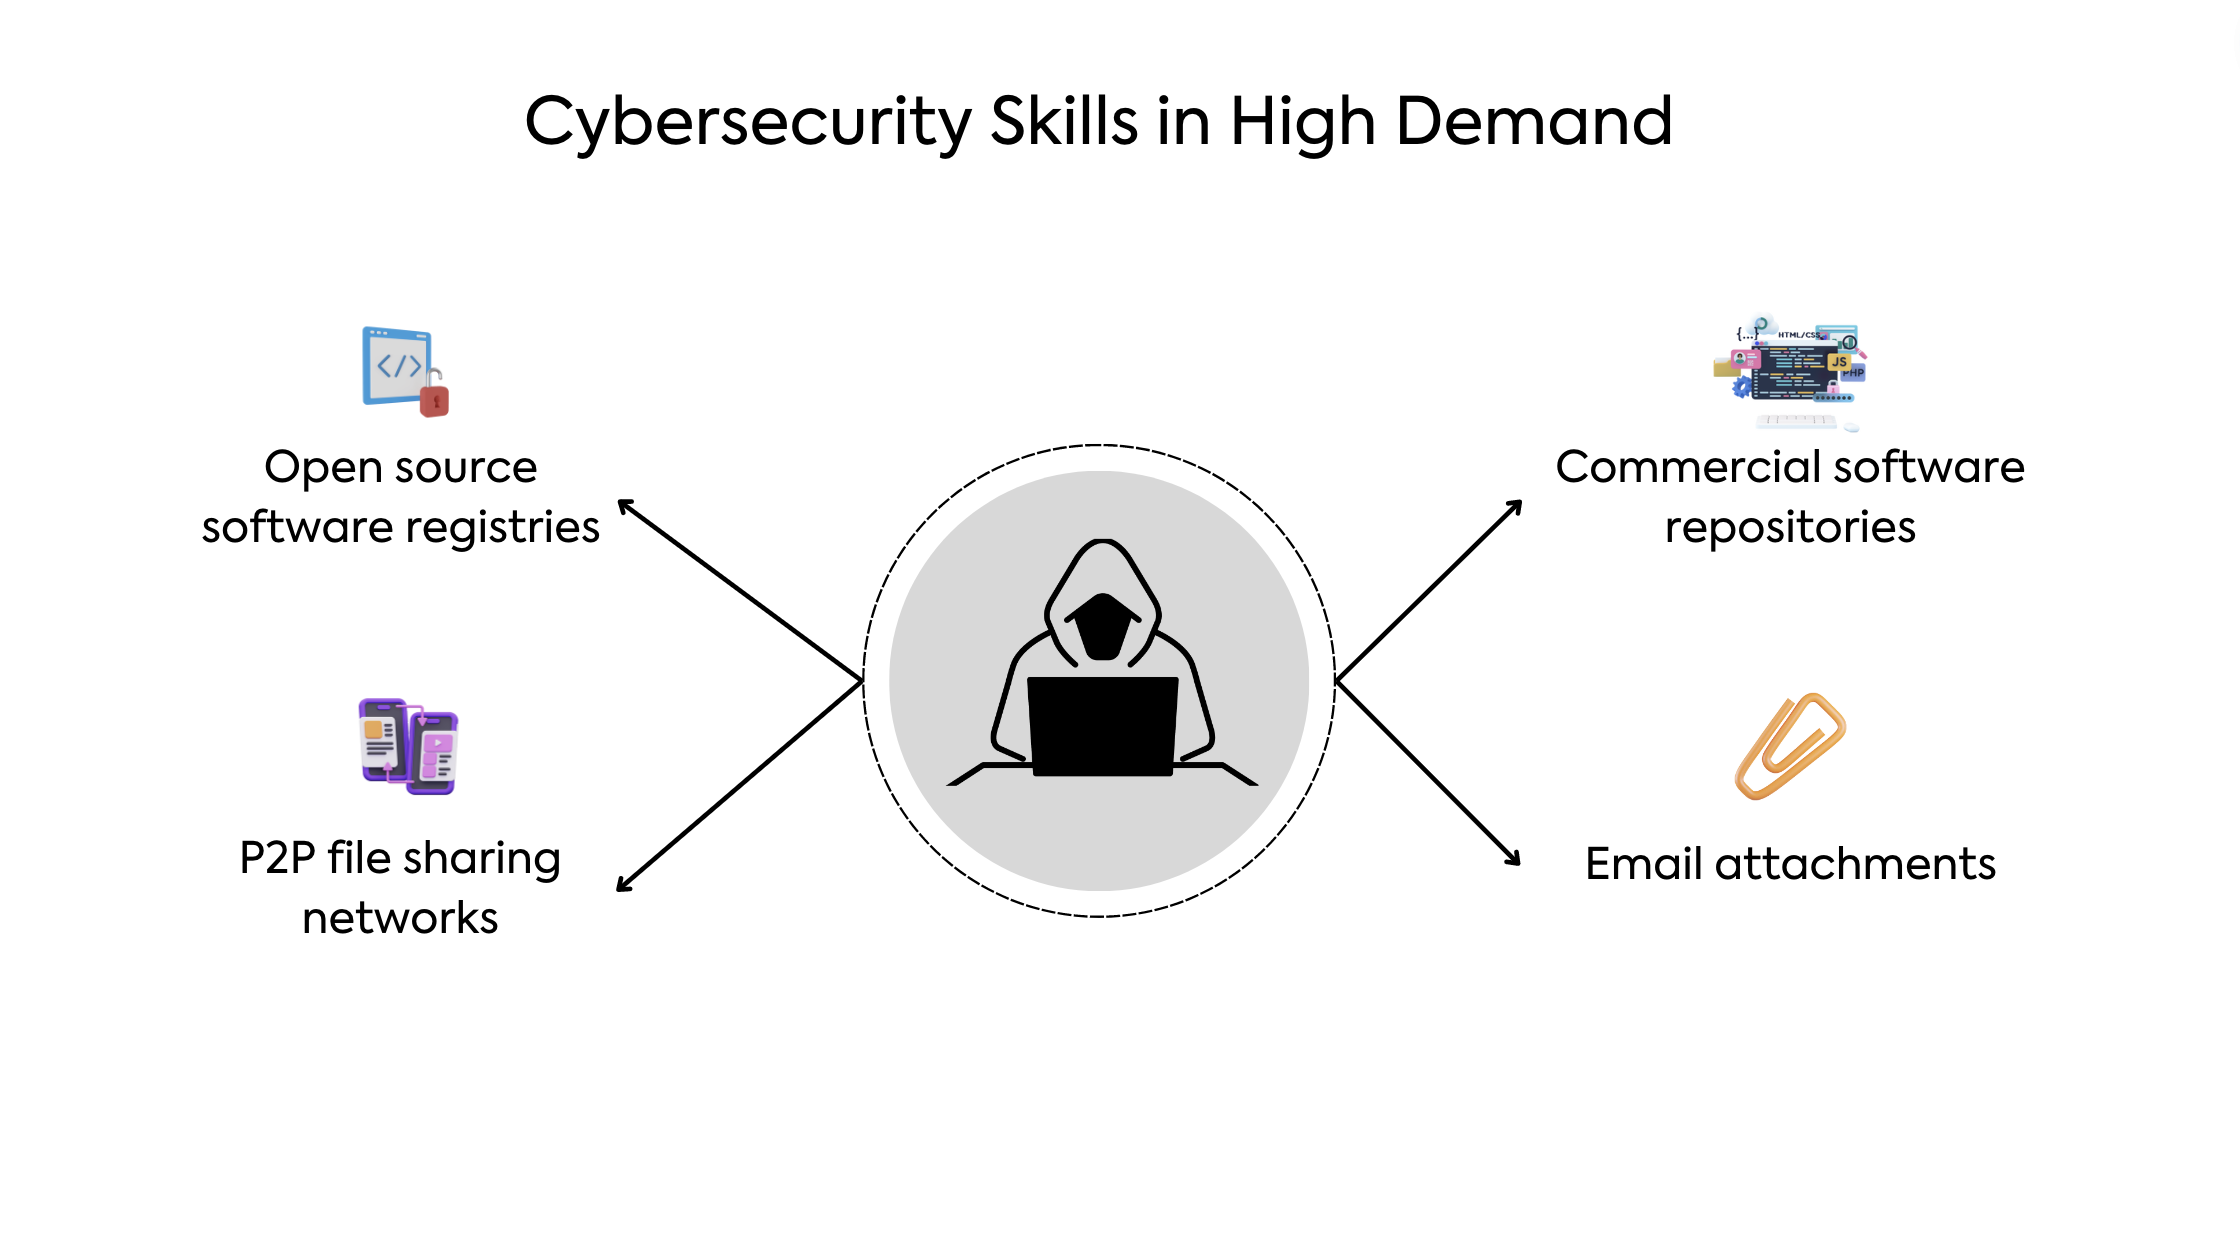 Cybersecurity skills in high demand